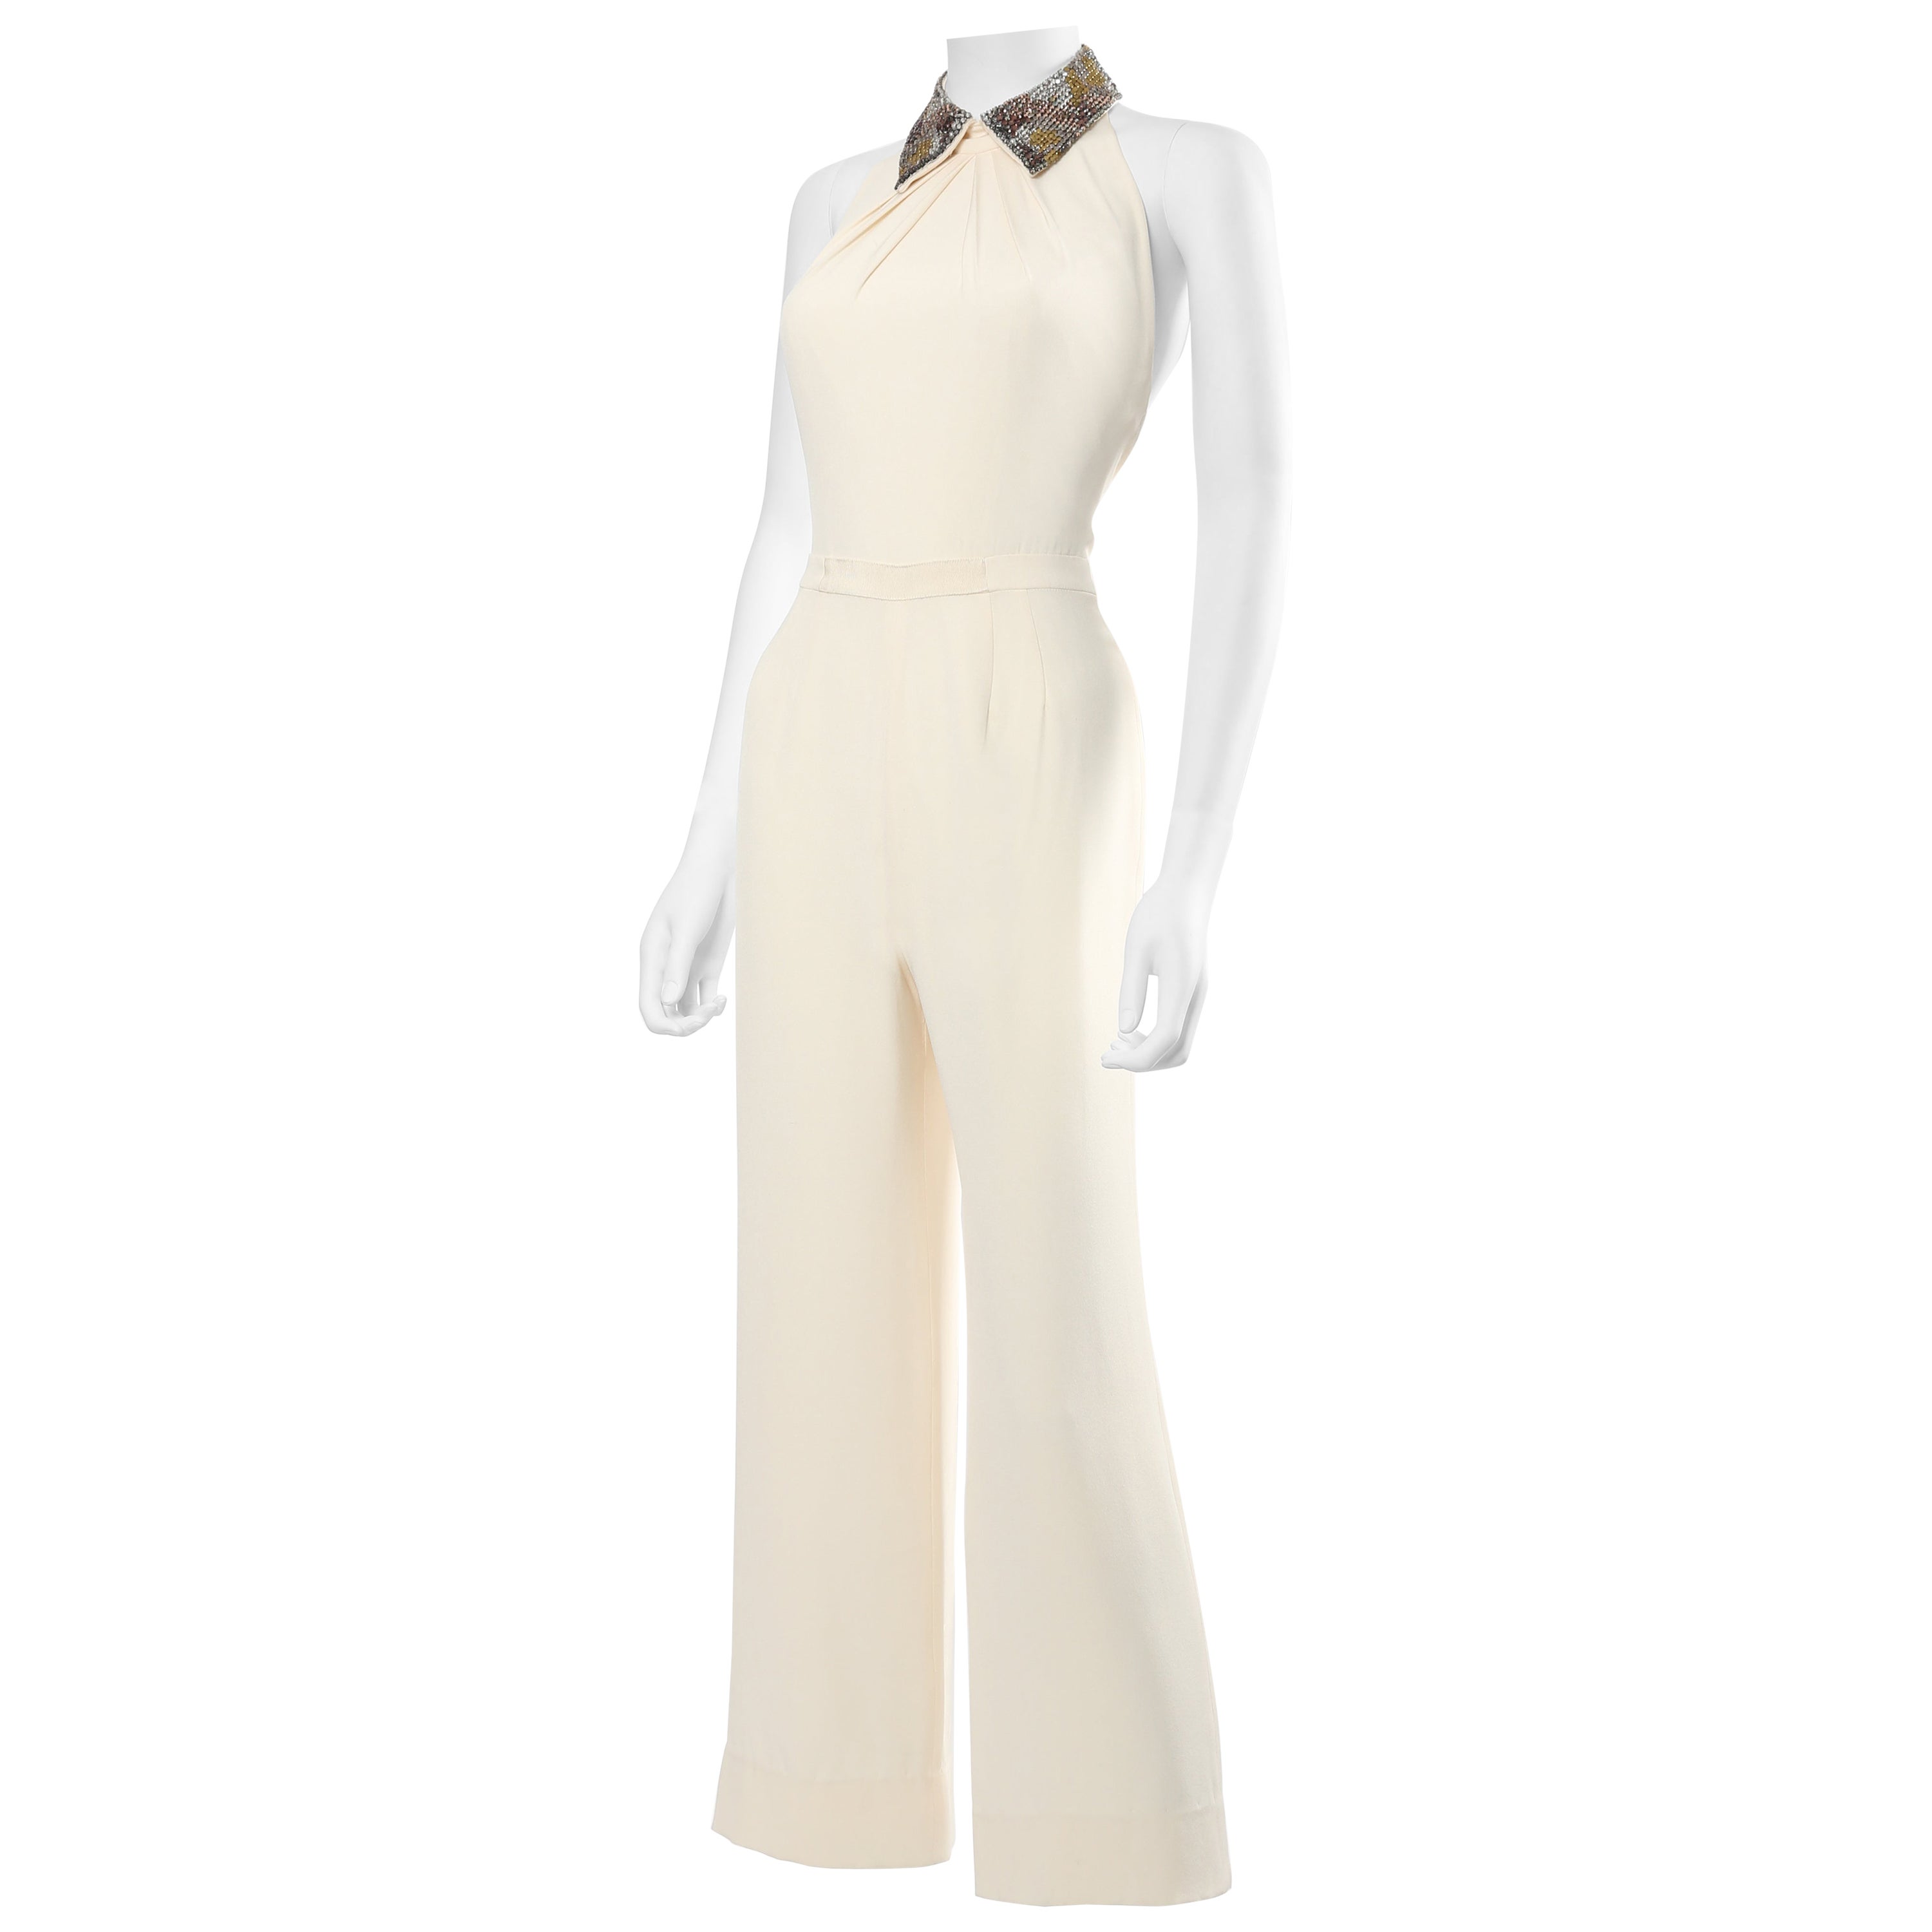 Jenny Packham ivory cream crystal jewel collar backless wedding dress jumpsuit